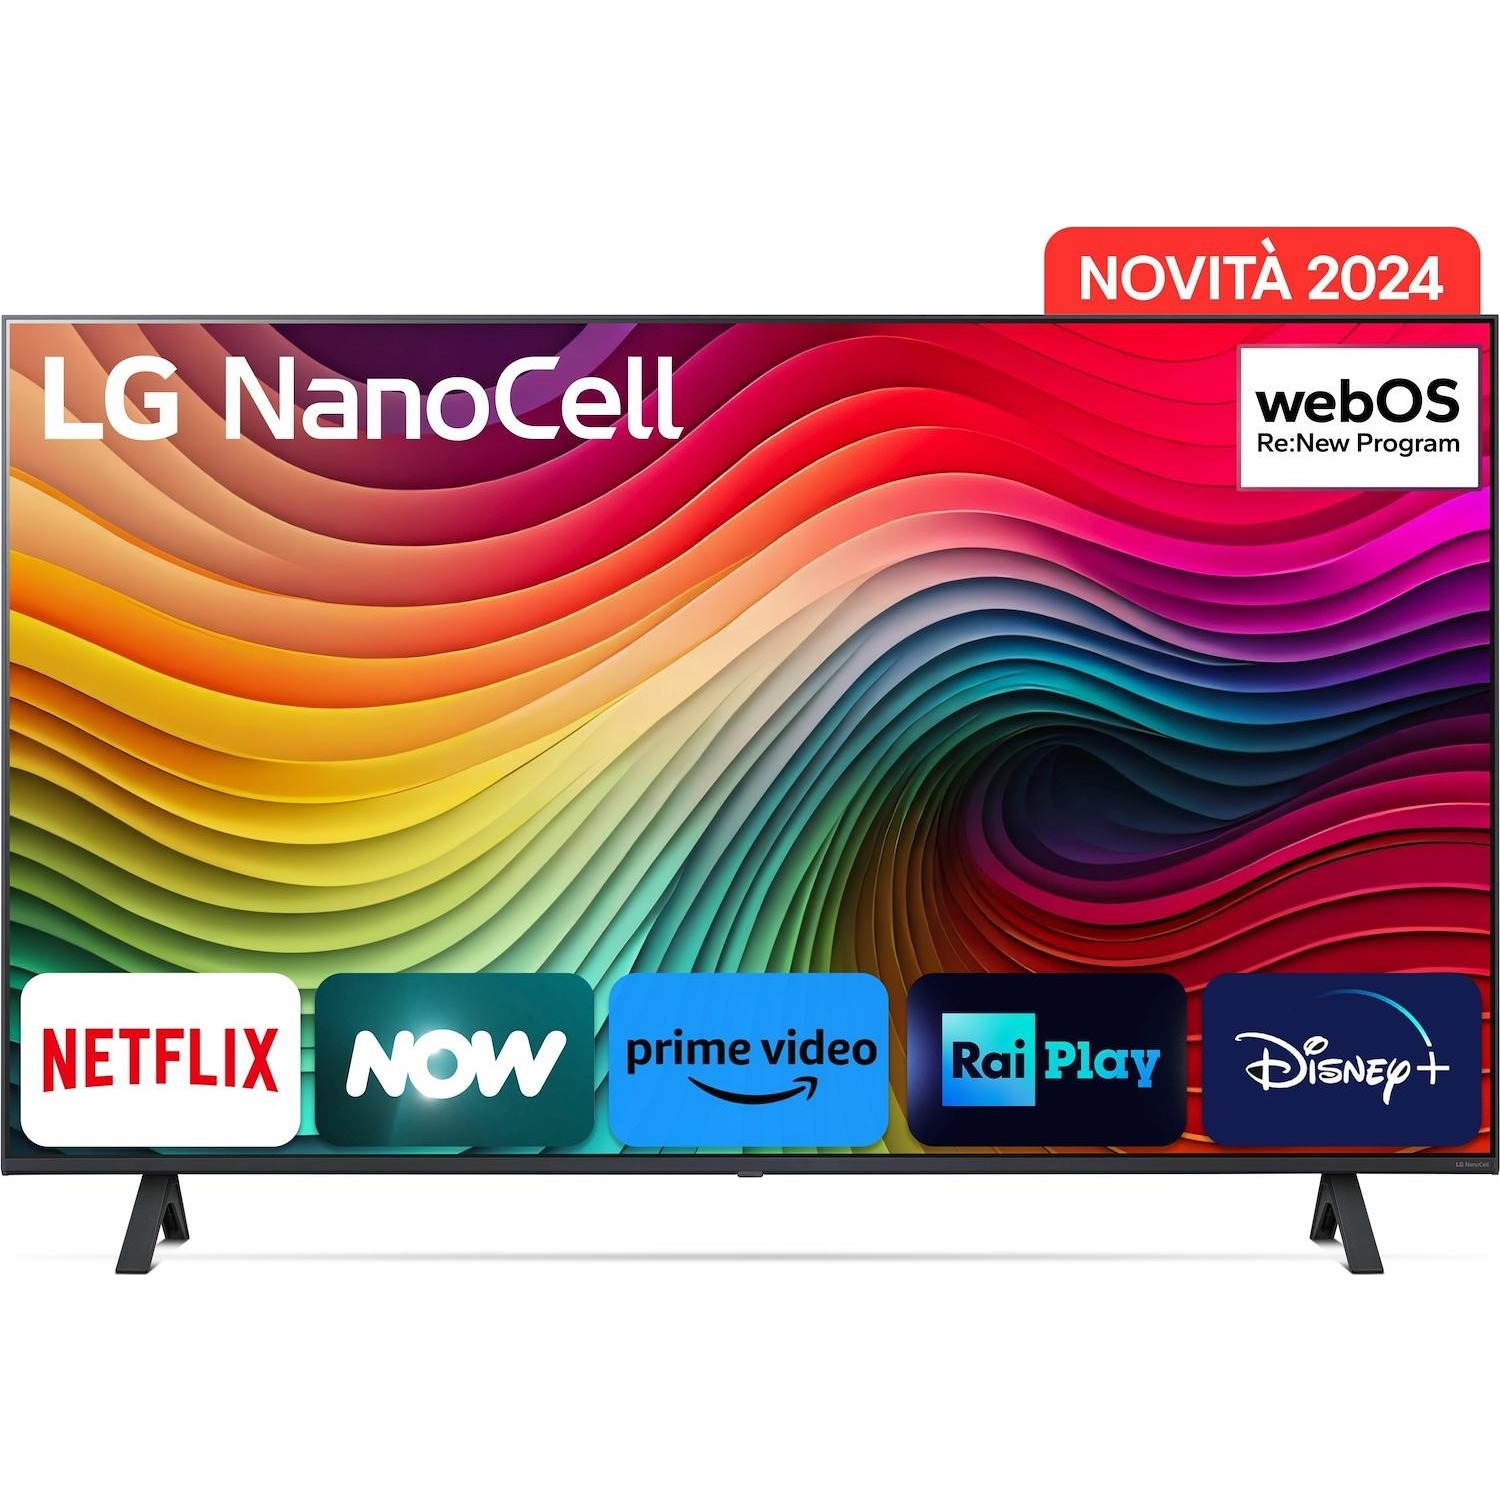 Immagine per TV LED Smart 4K UHD LG 43NANO82T6 NanoCell da DIMOStore